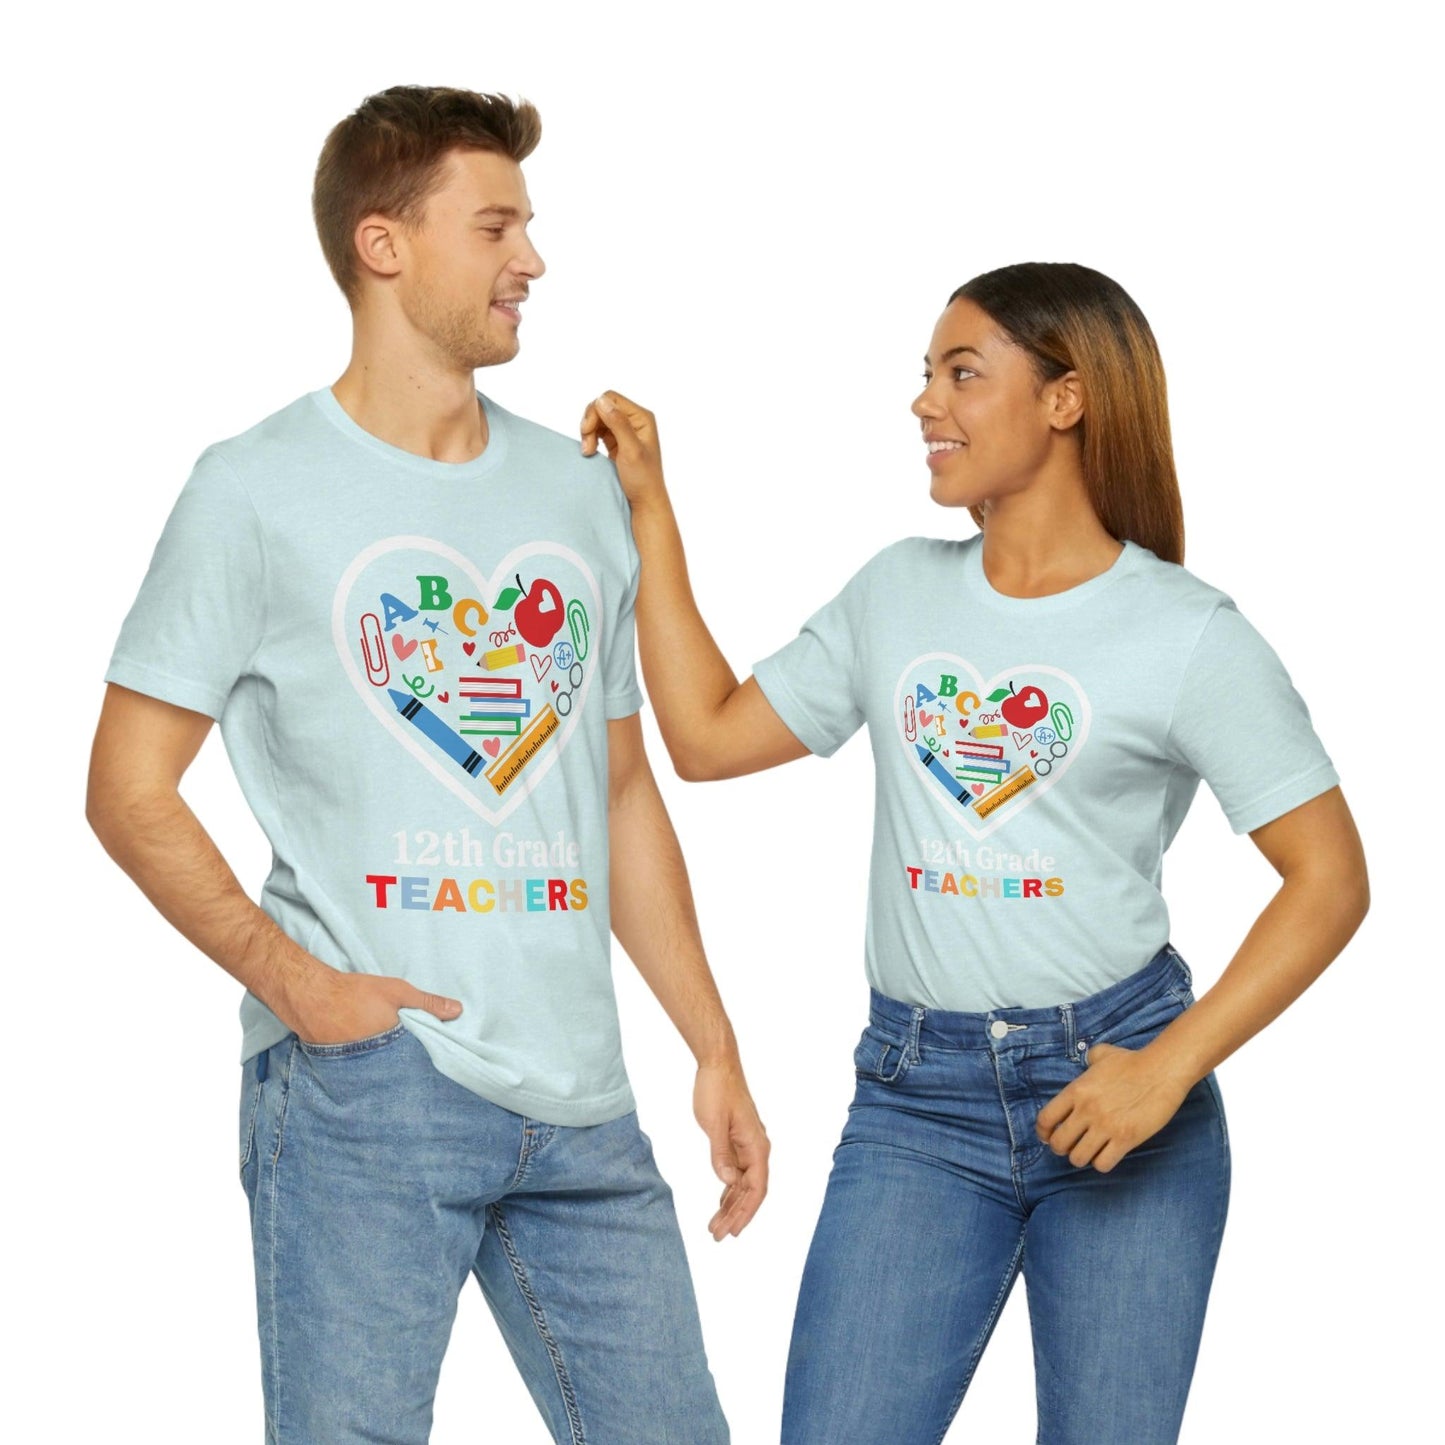 Love 12th Grade Teacher Shirt - Teacher Appreciation Shirt - Gift for teachers - Giftsmojo